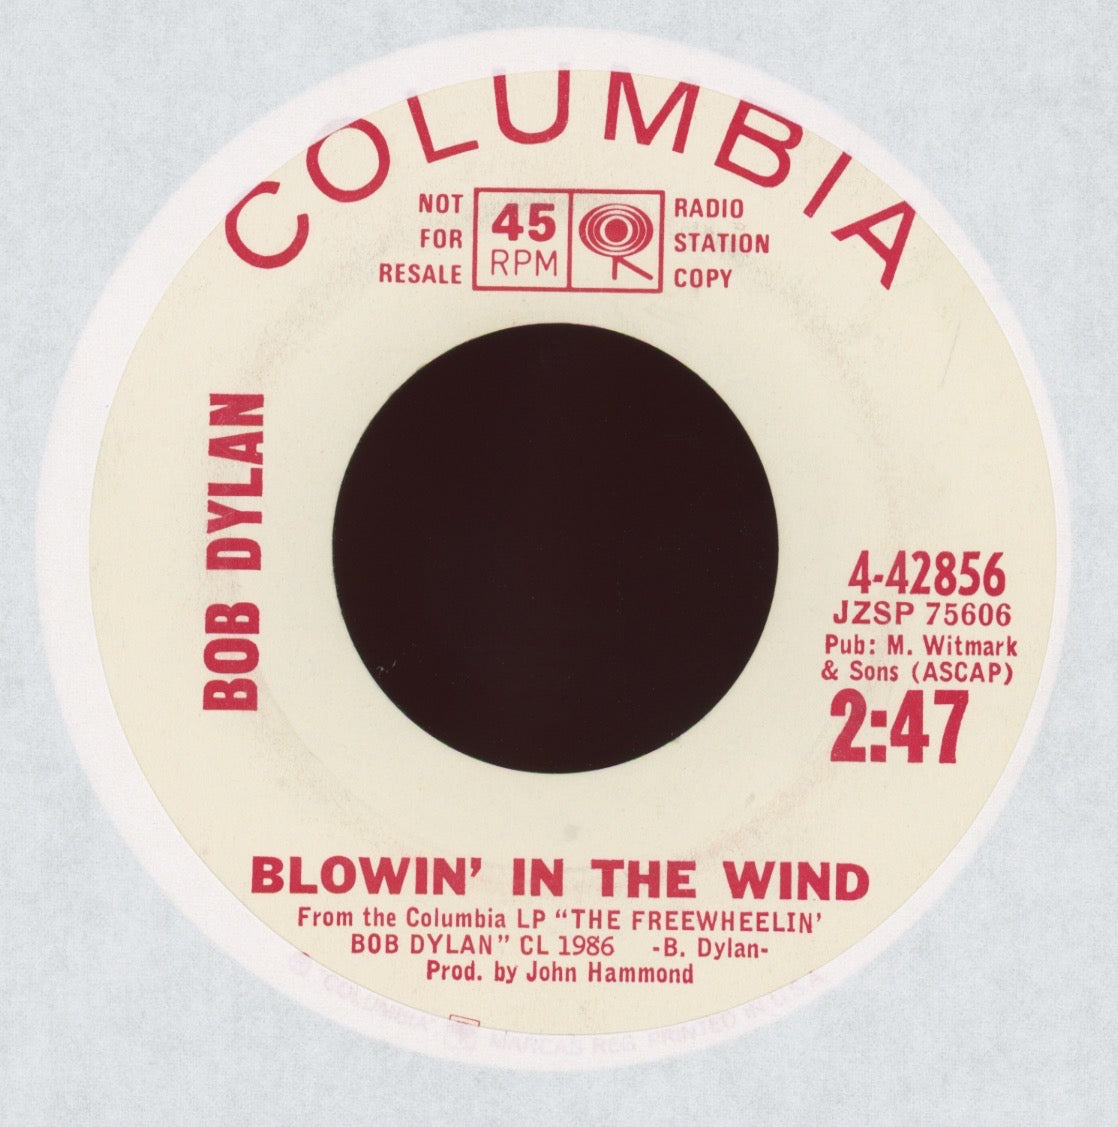 Bob Dylan - Blowin' In The Wind on Columbia Promo Rock 45